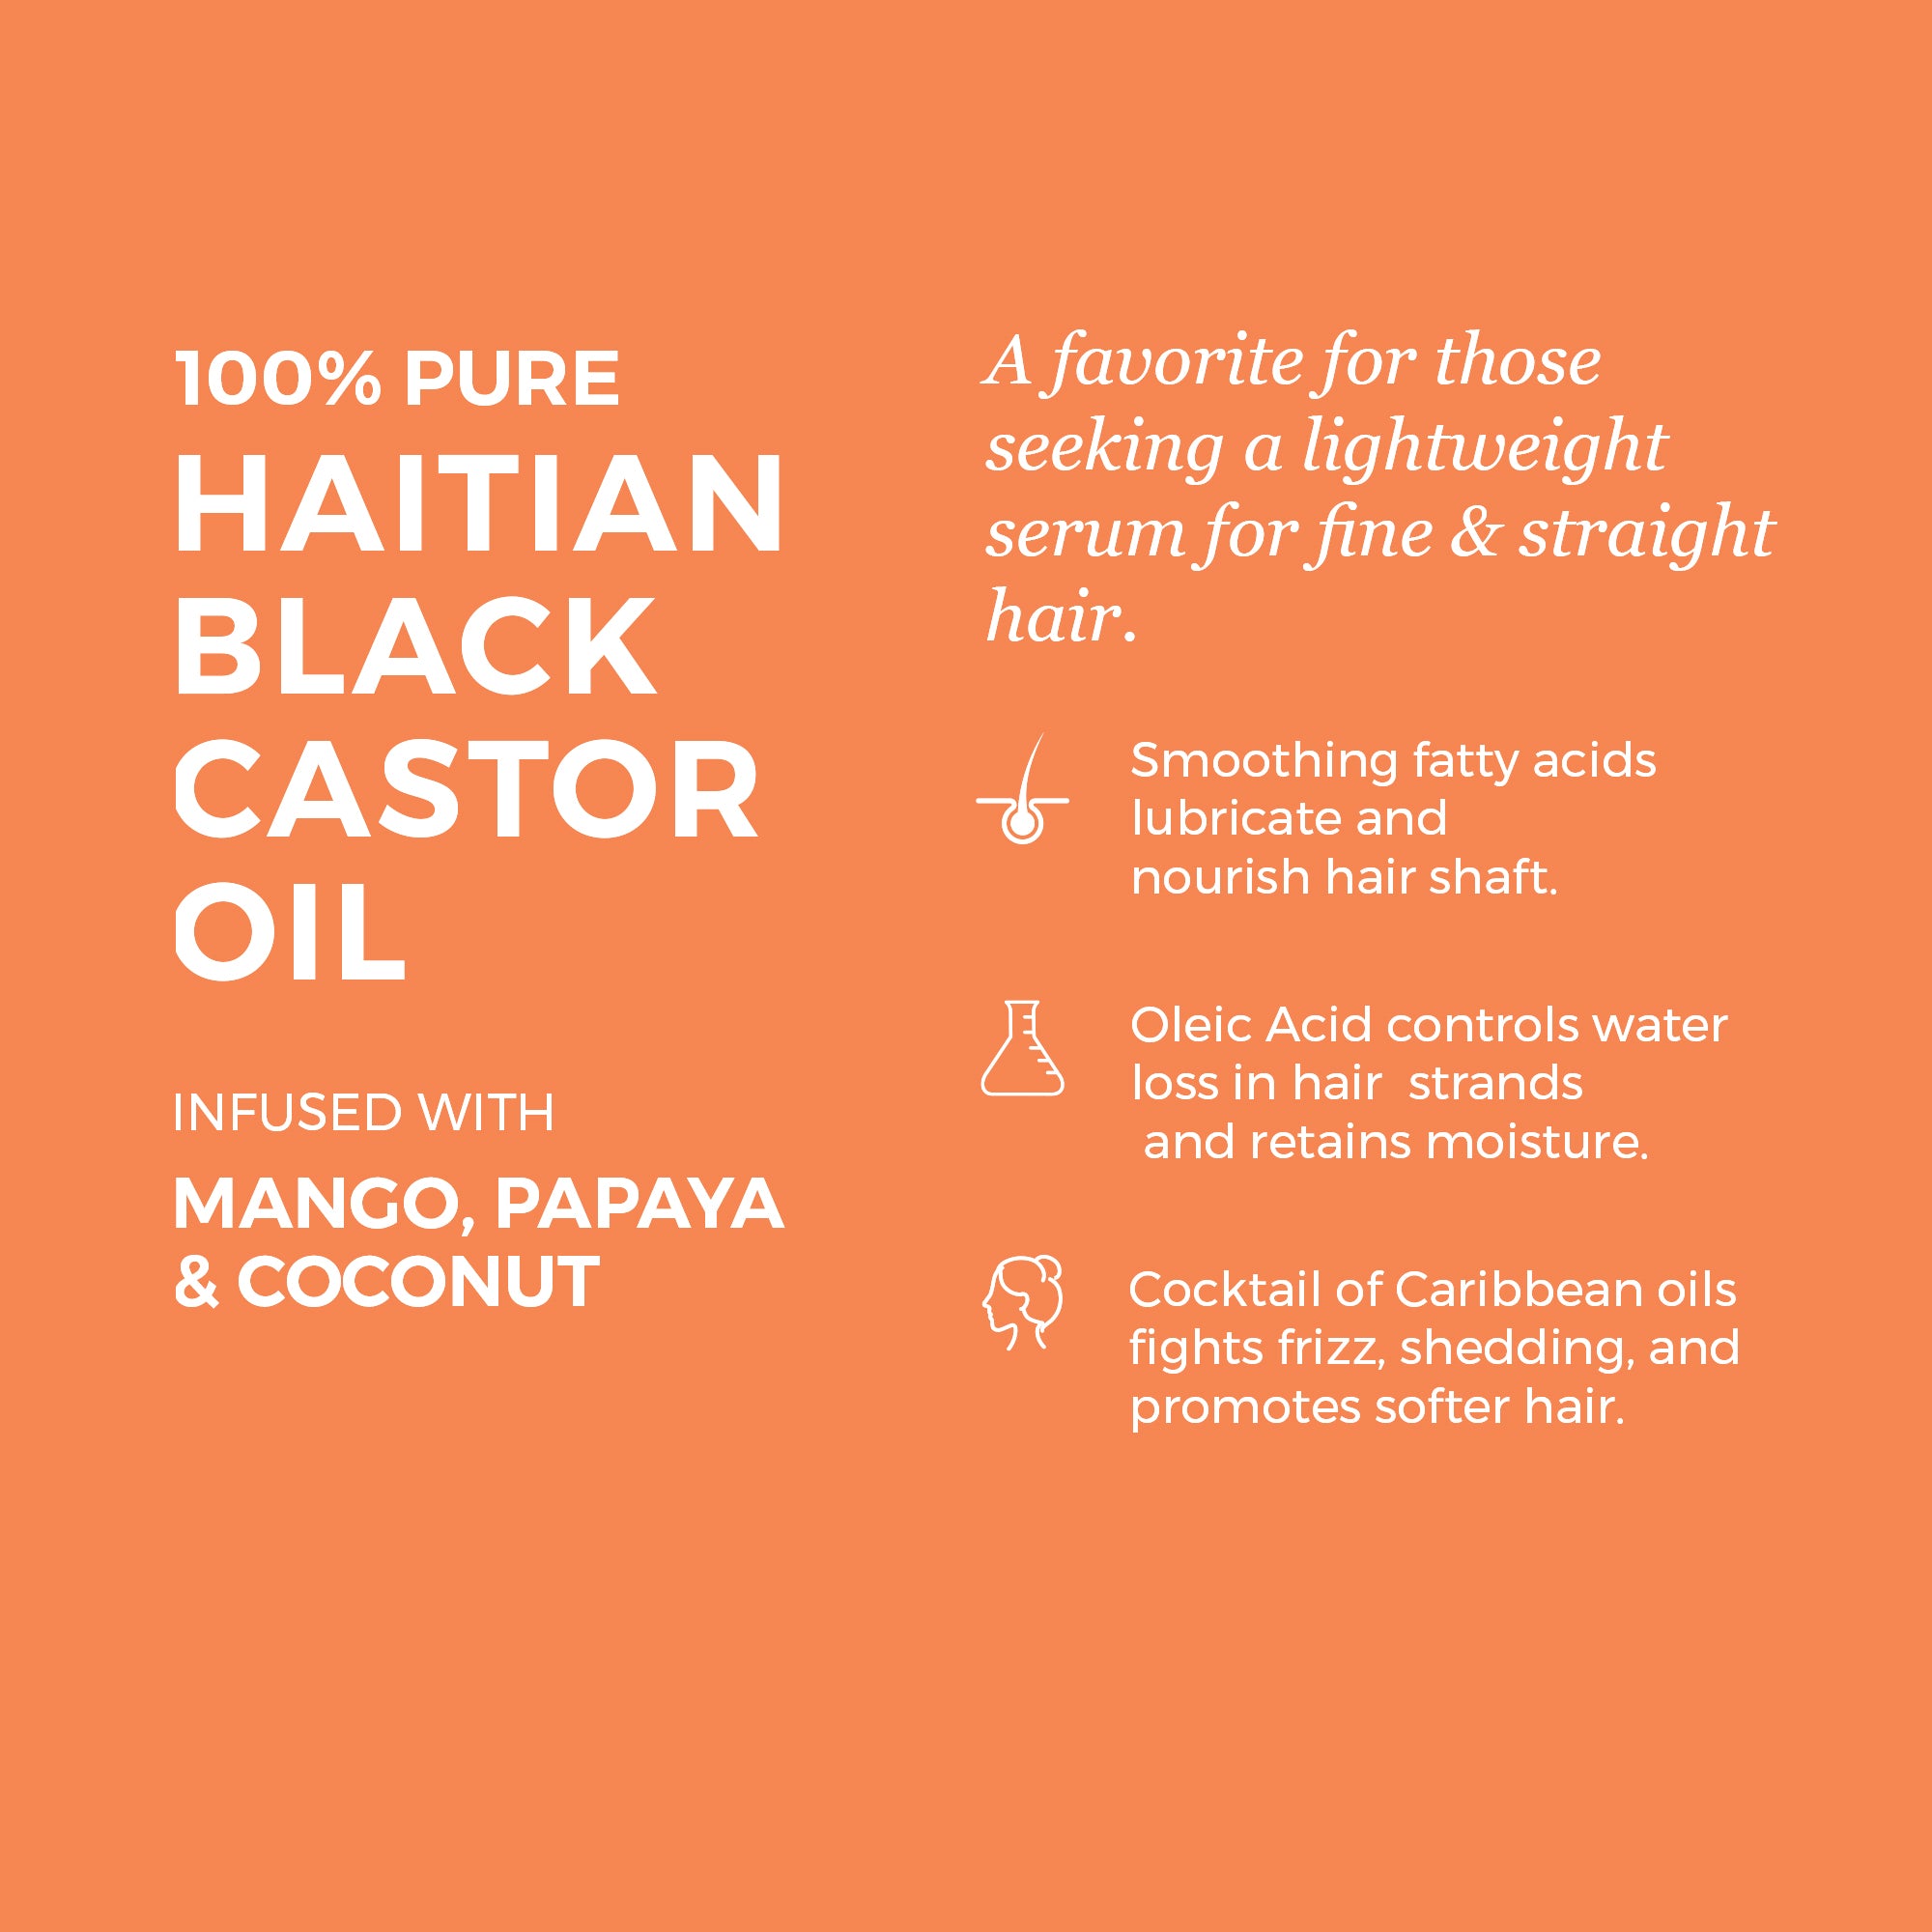 Buy 2, Get 1 FREE - Haitian Black Castor Oil Bundle